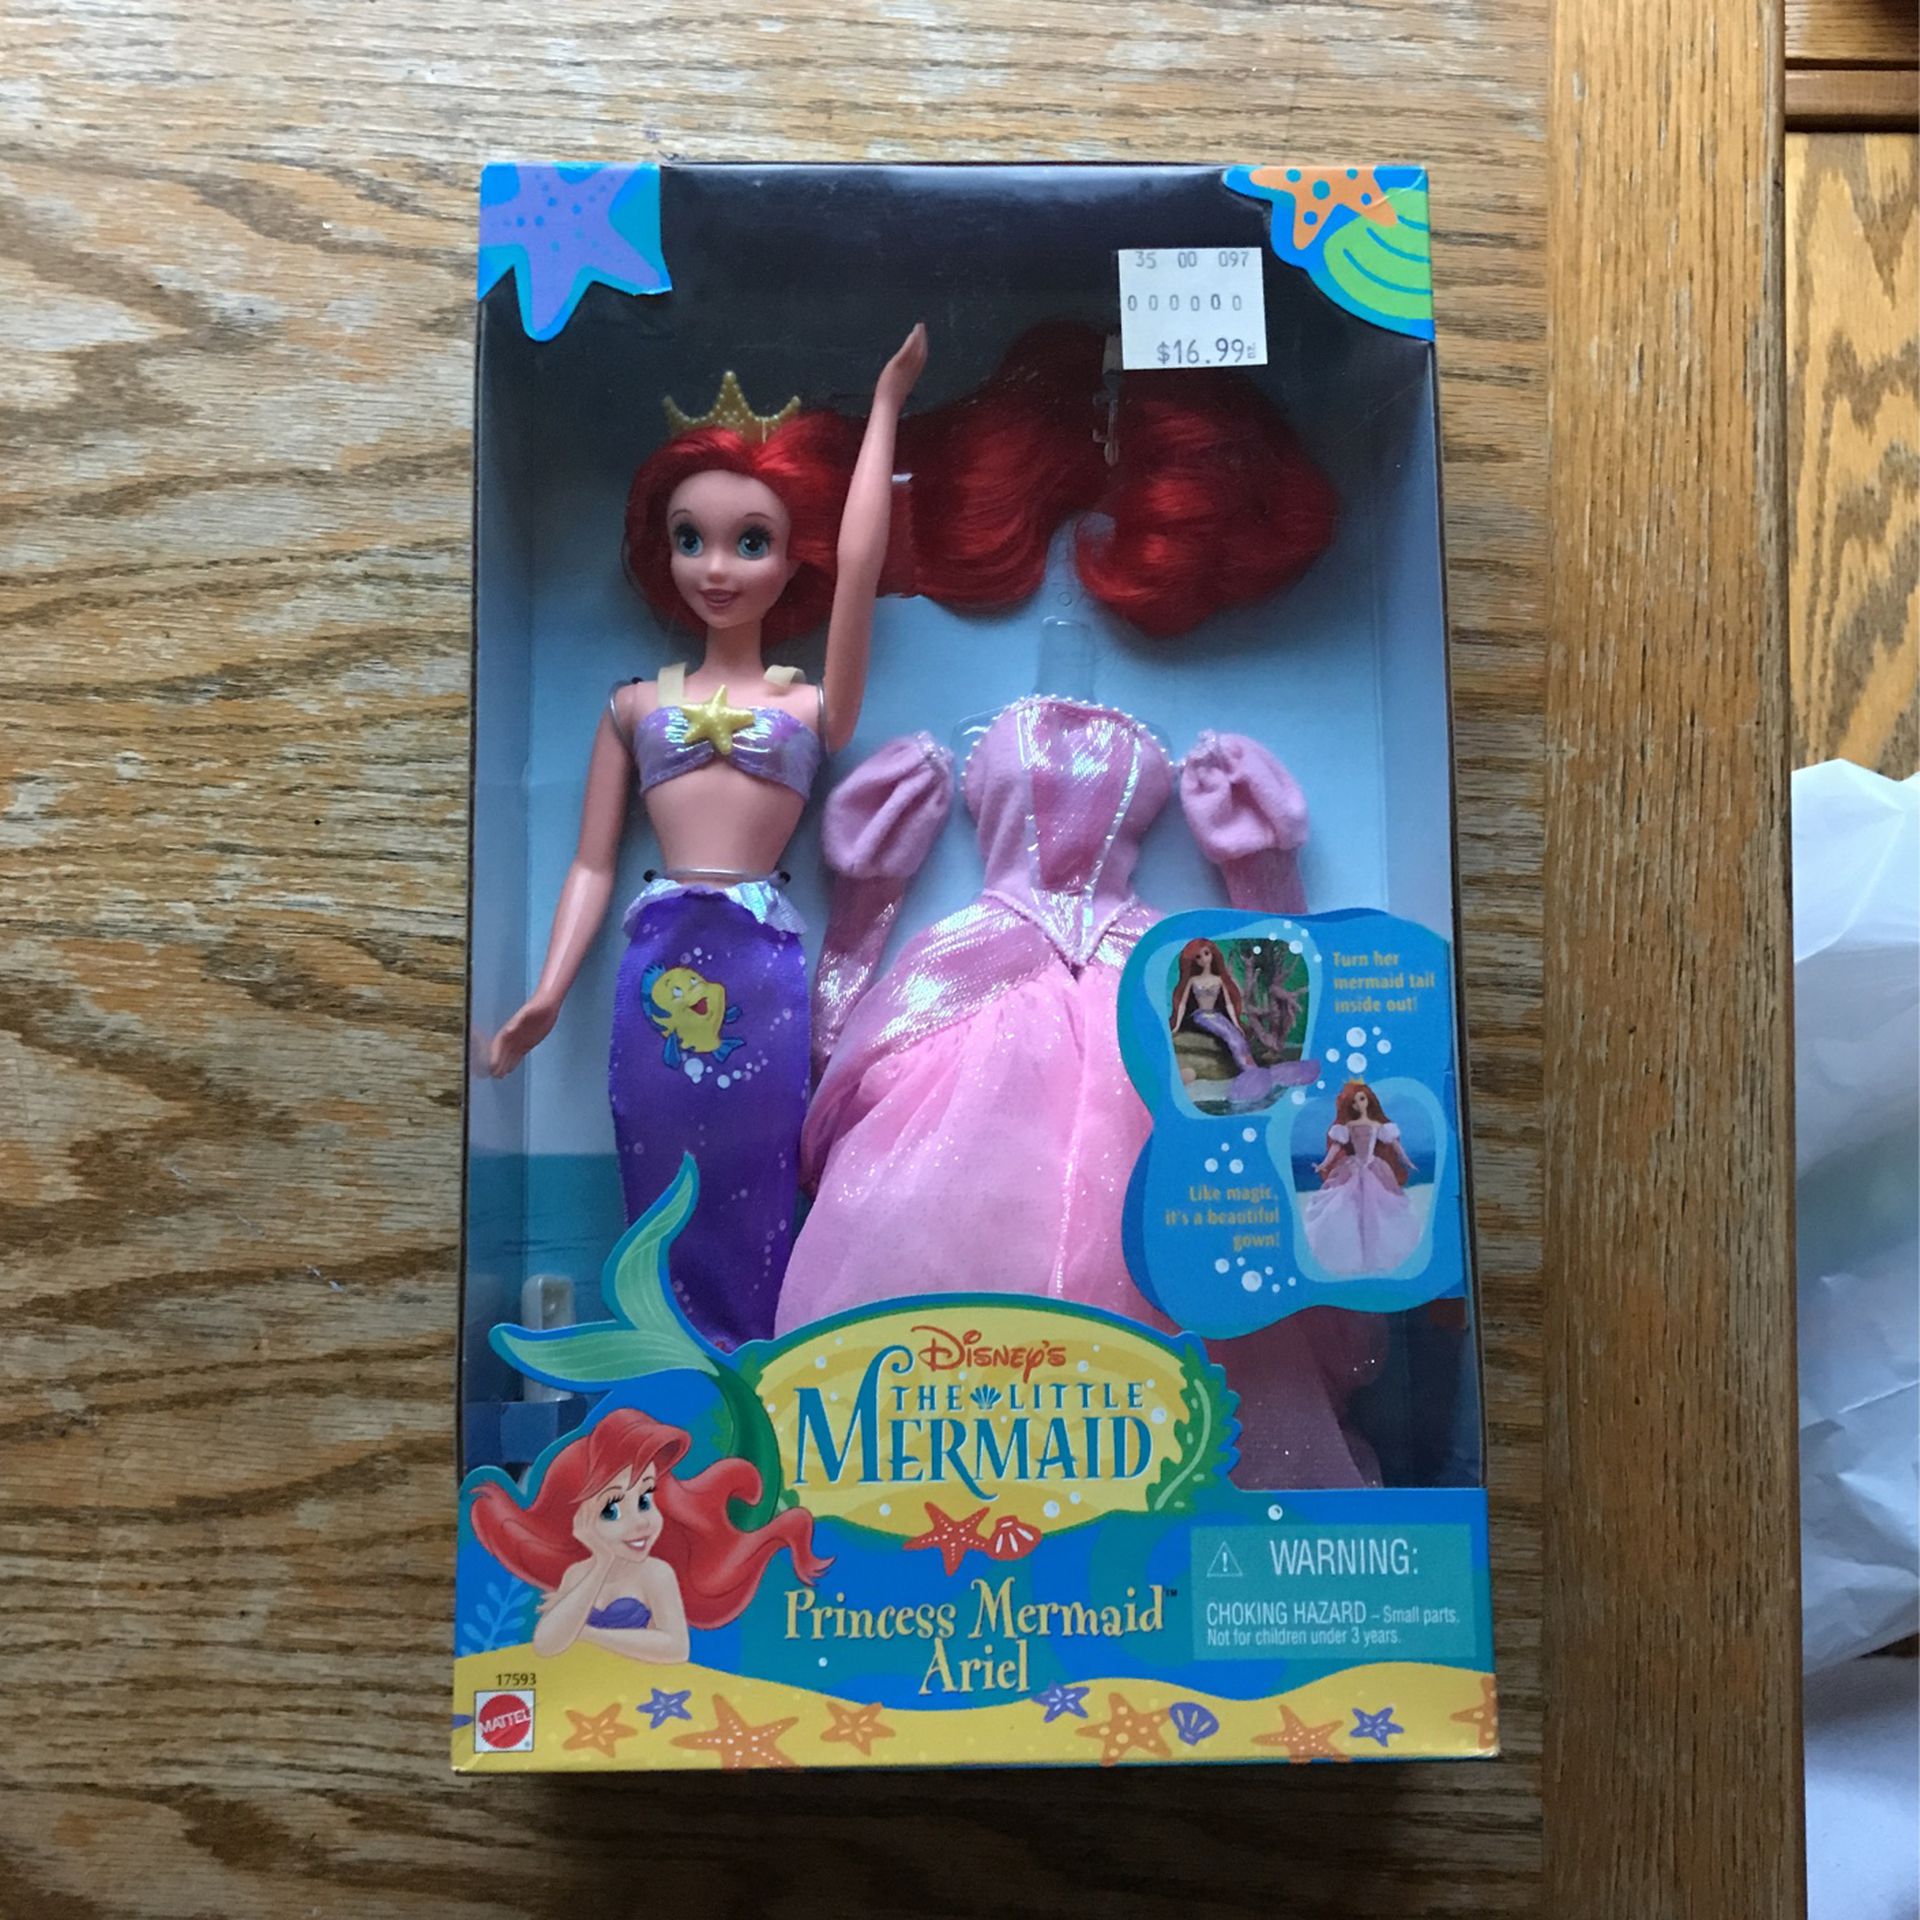 Disney's The Little Mermaid Princess Mermaid Ariel Doll 1997 Mattel #17593  for Sale in Los Angeles, CA - OfferUp